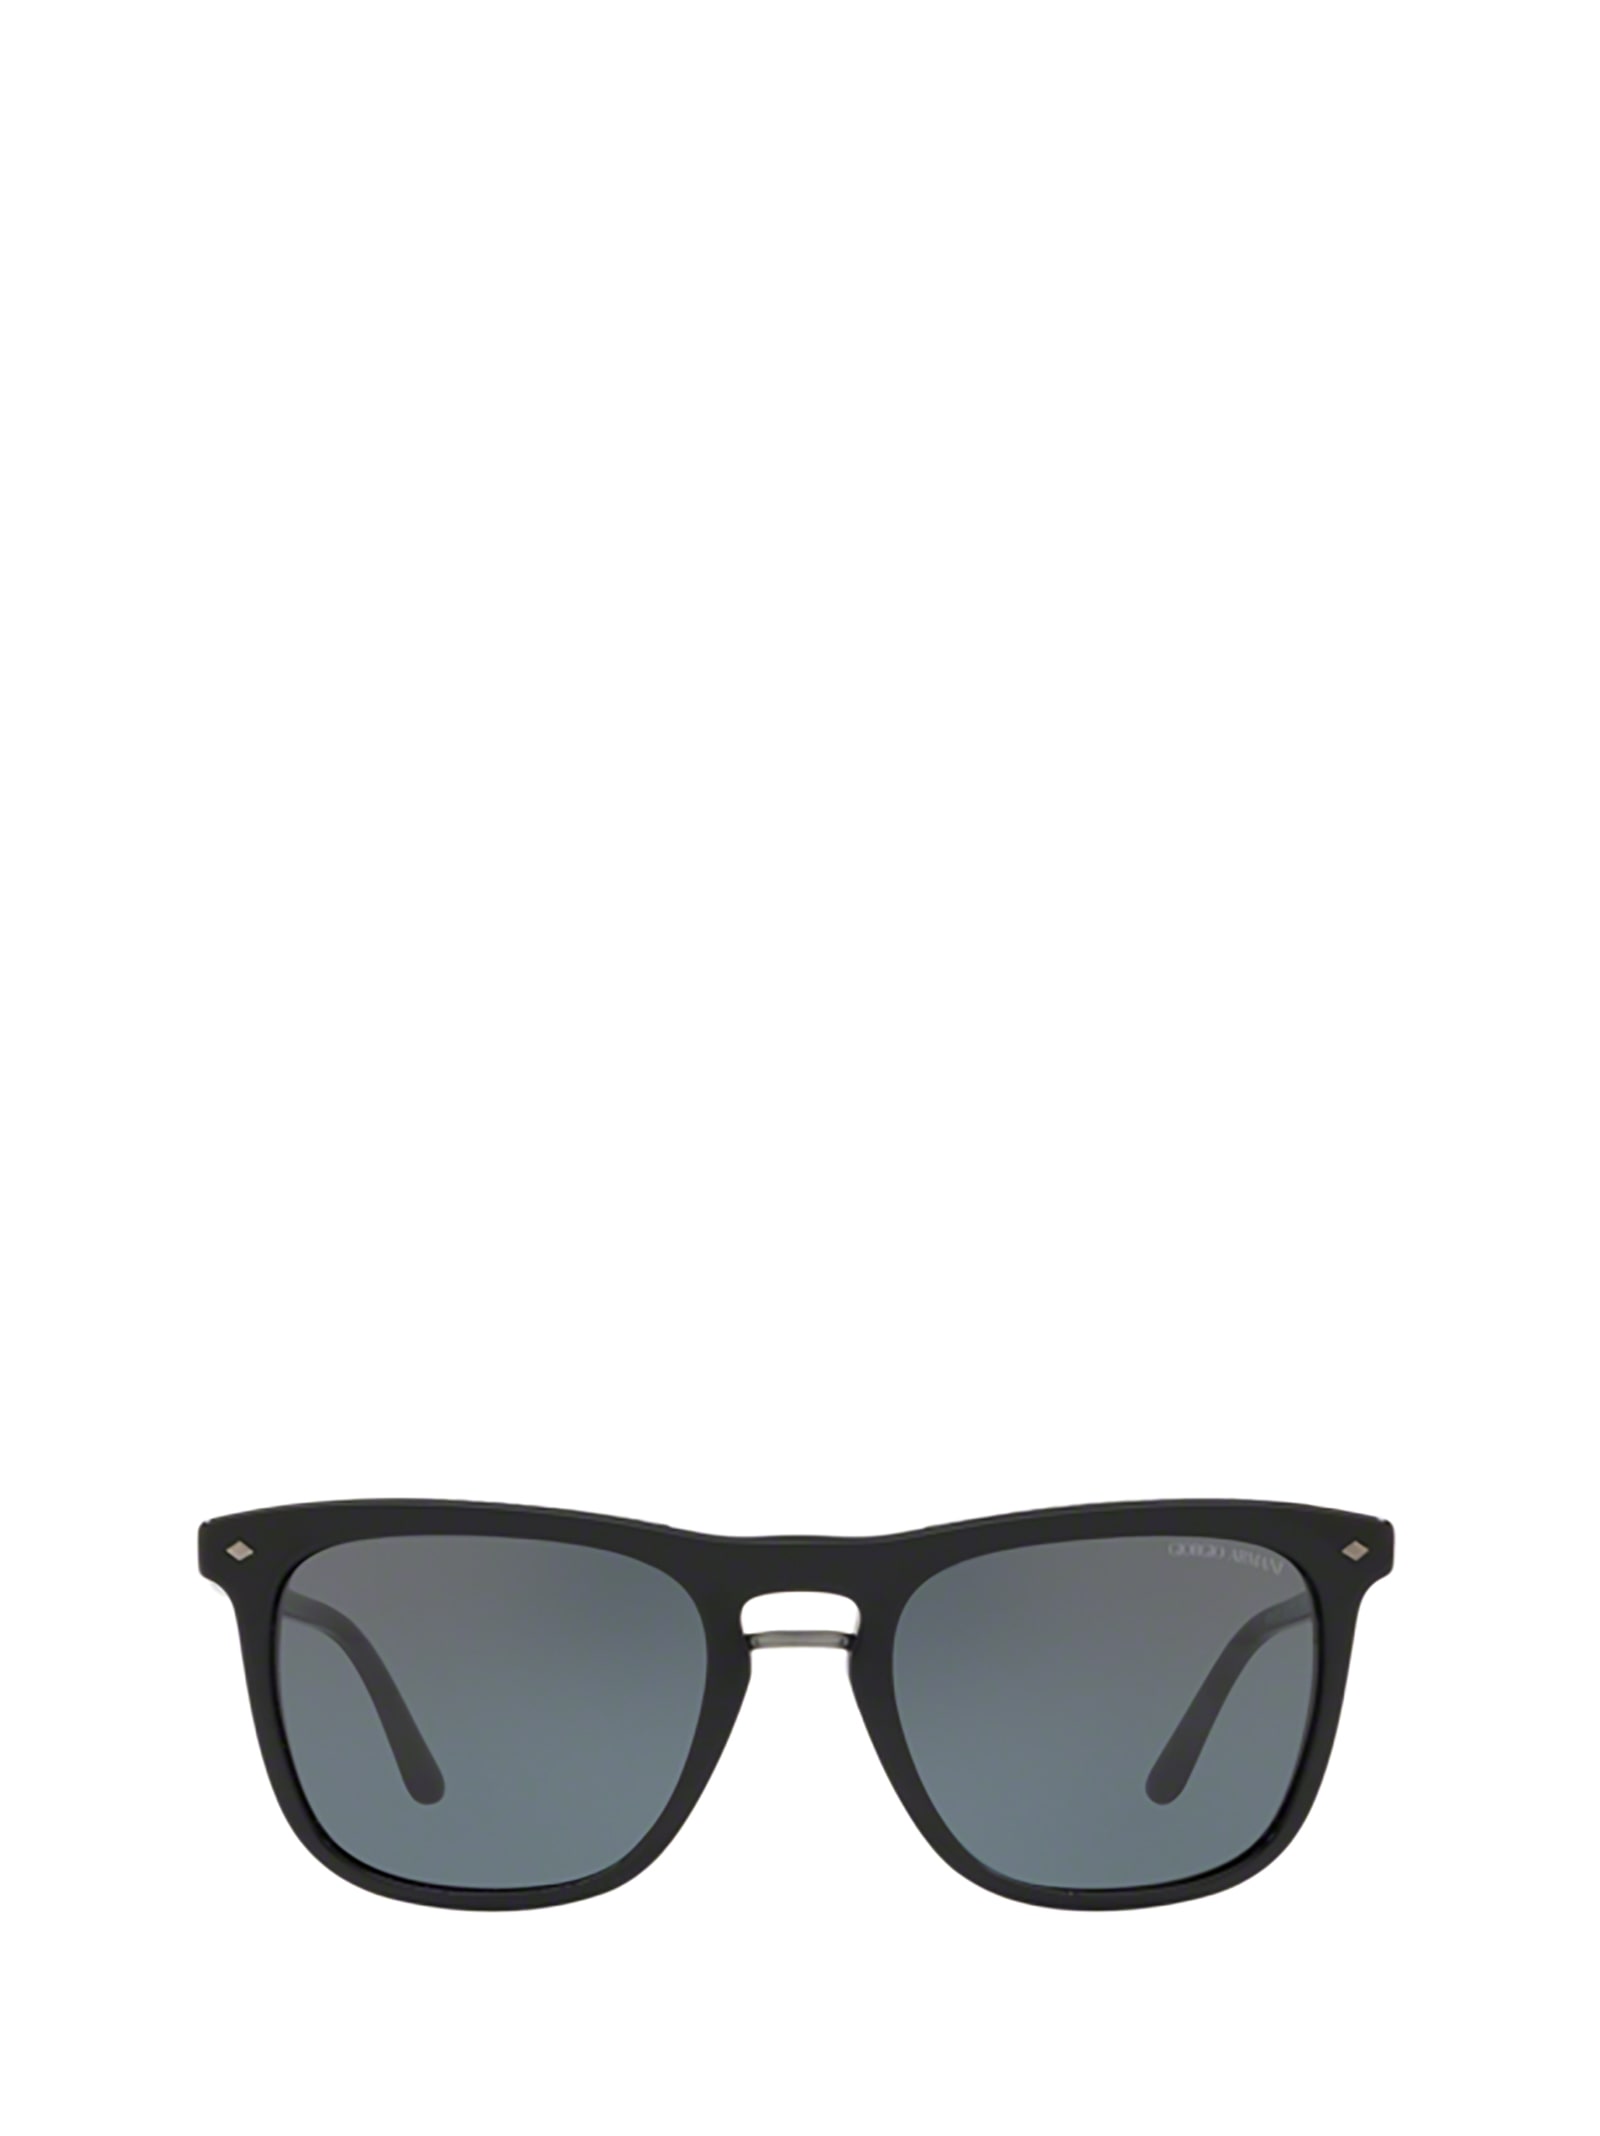 Giorgio Armani Giorgio Armani Ar8107 Black Sunglasses